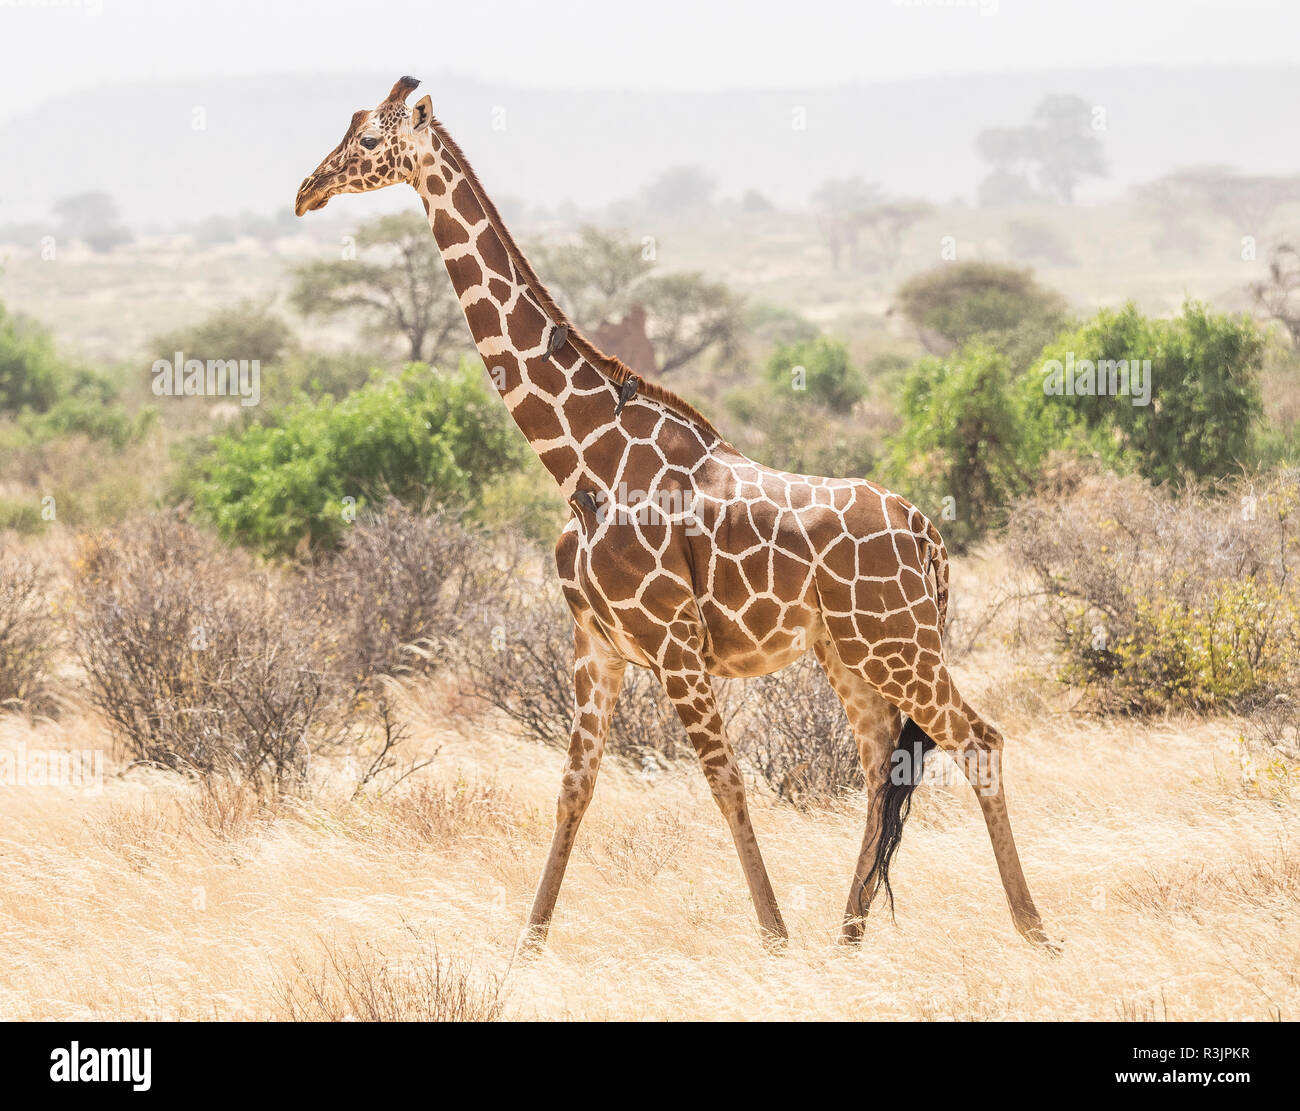 Afrique, Kenya, Samburu National Reserve. Giraffe réticulée marche à pied. En tant que crédit : Bill Young / Jaynes Gallery / DanitaDelimont.com Banque D'Images